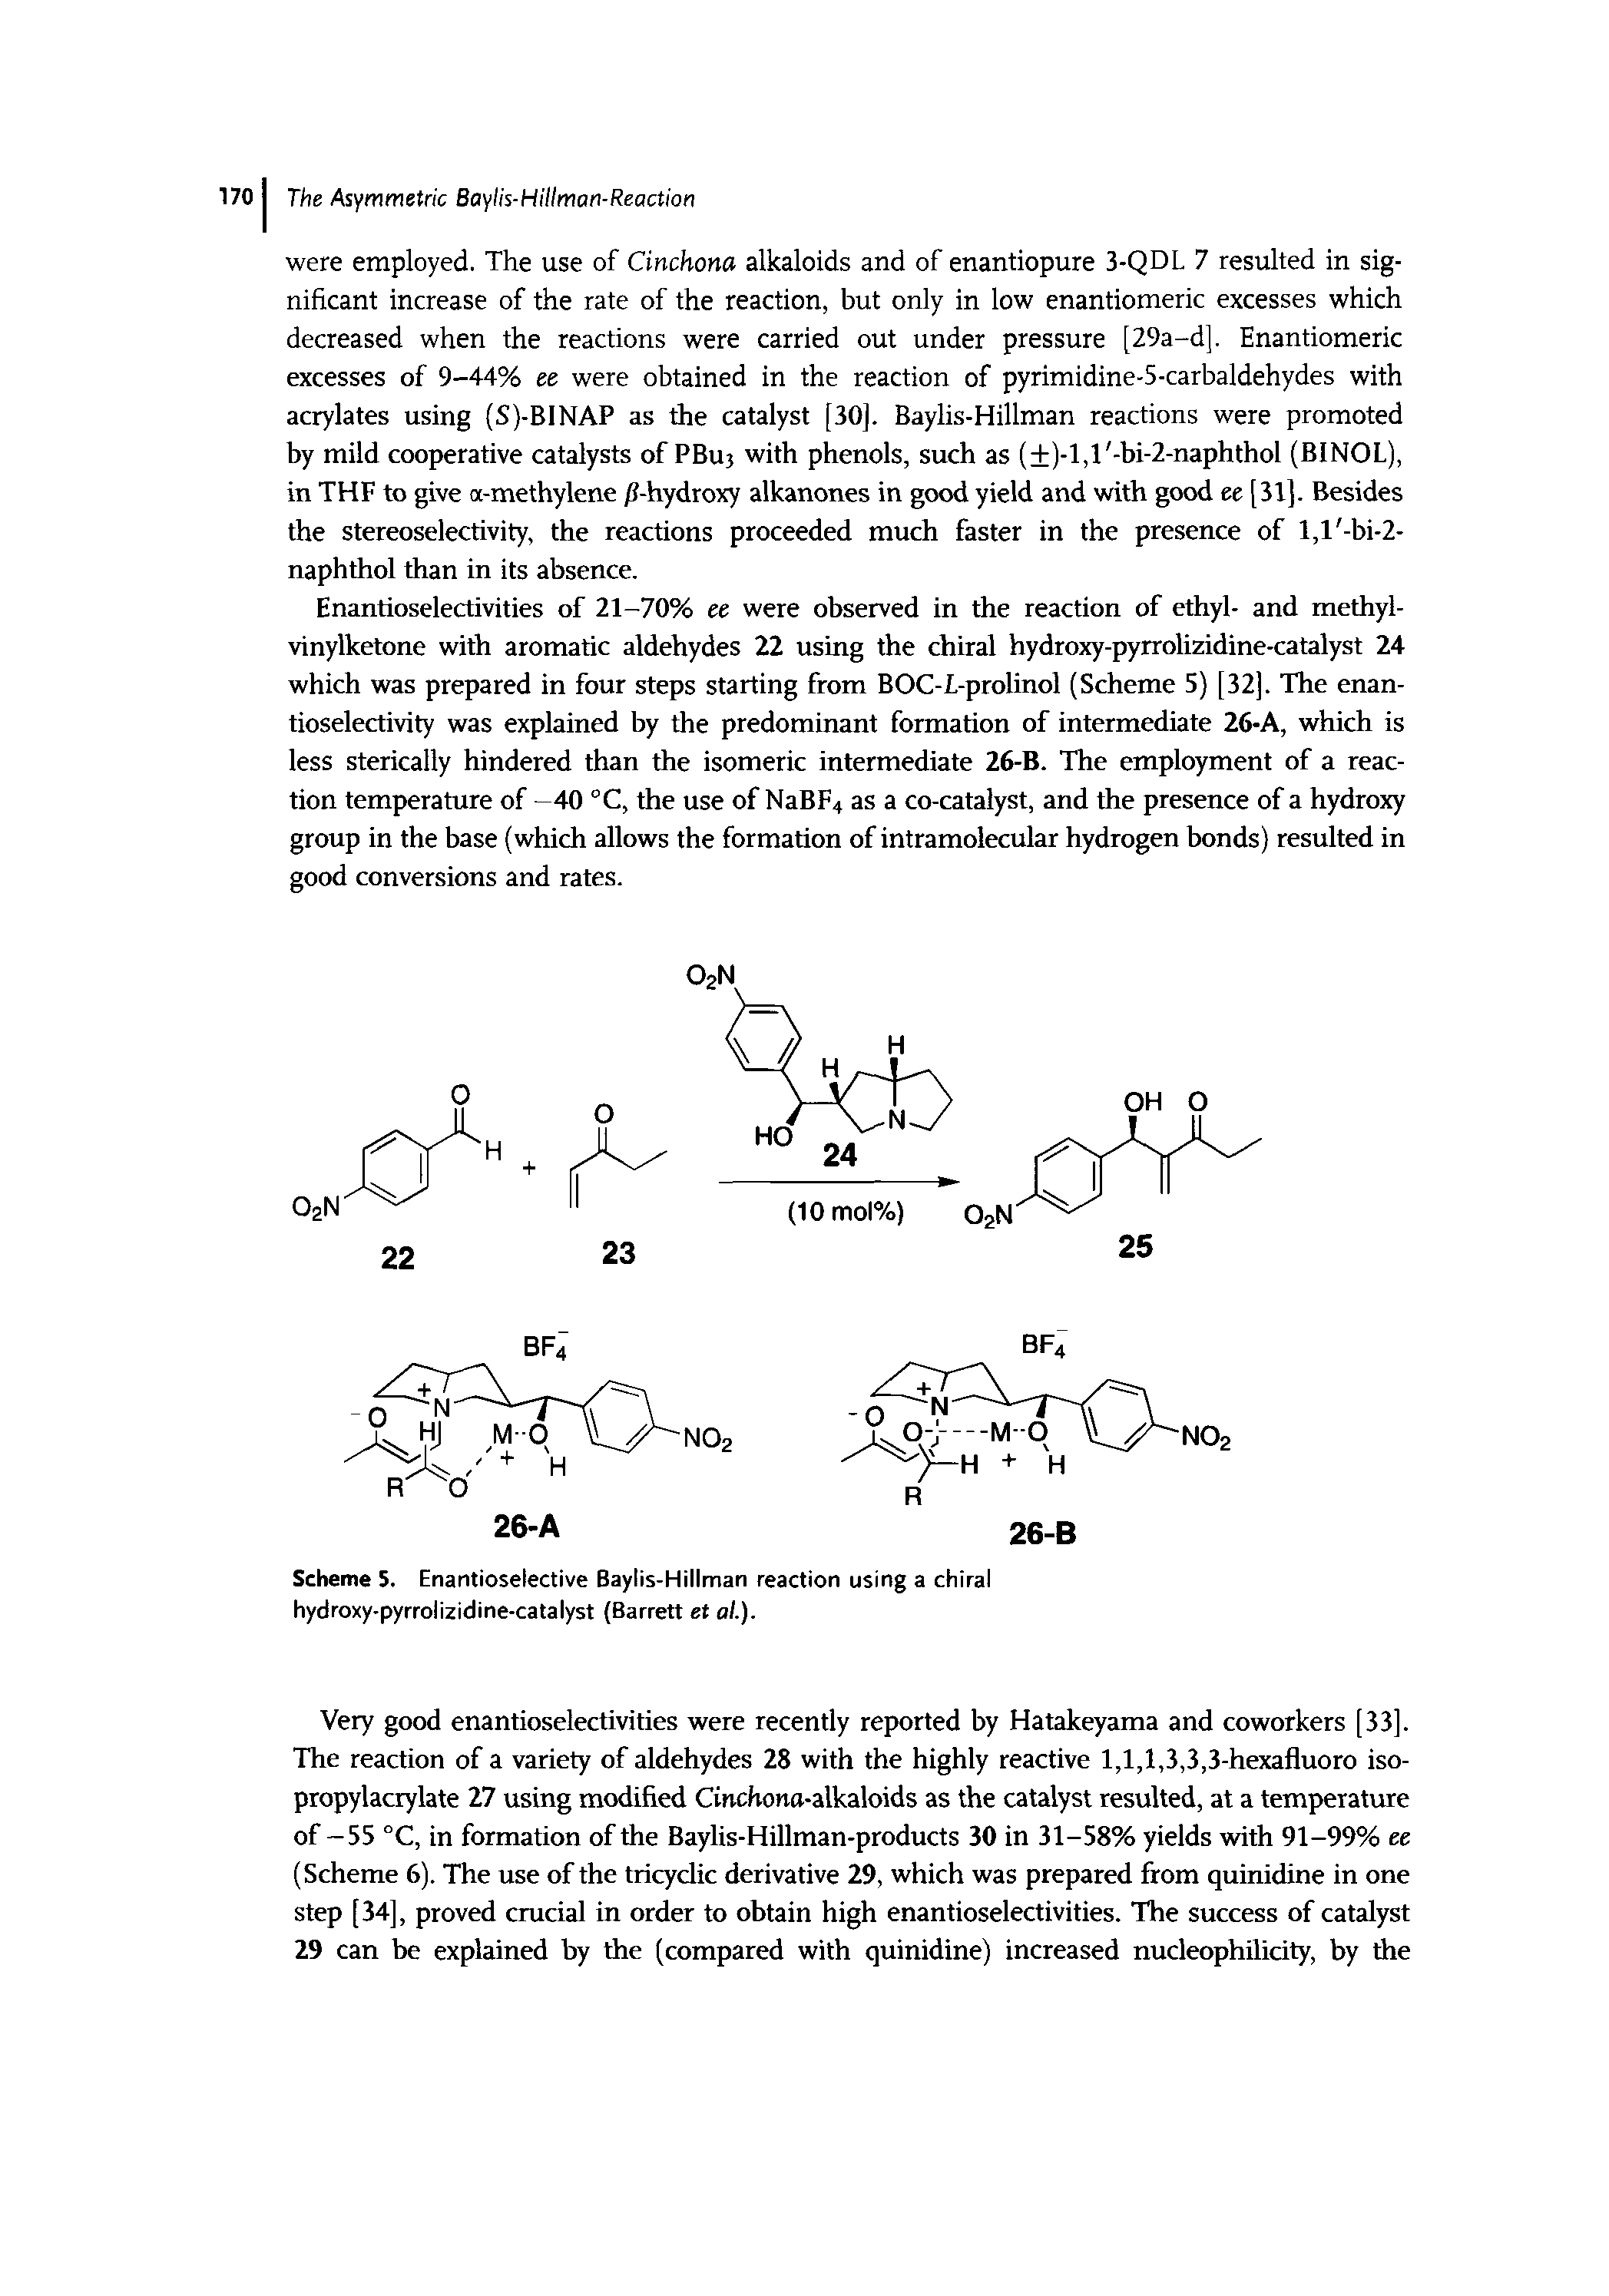 Scheme 5. Enantioselective Baylis-Hillman reaction using a chiral hydroxy-pyrrolizidine-catalyst (Barrett et al.).